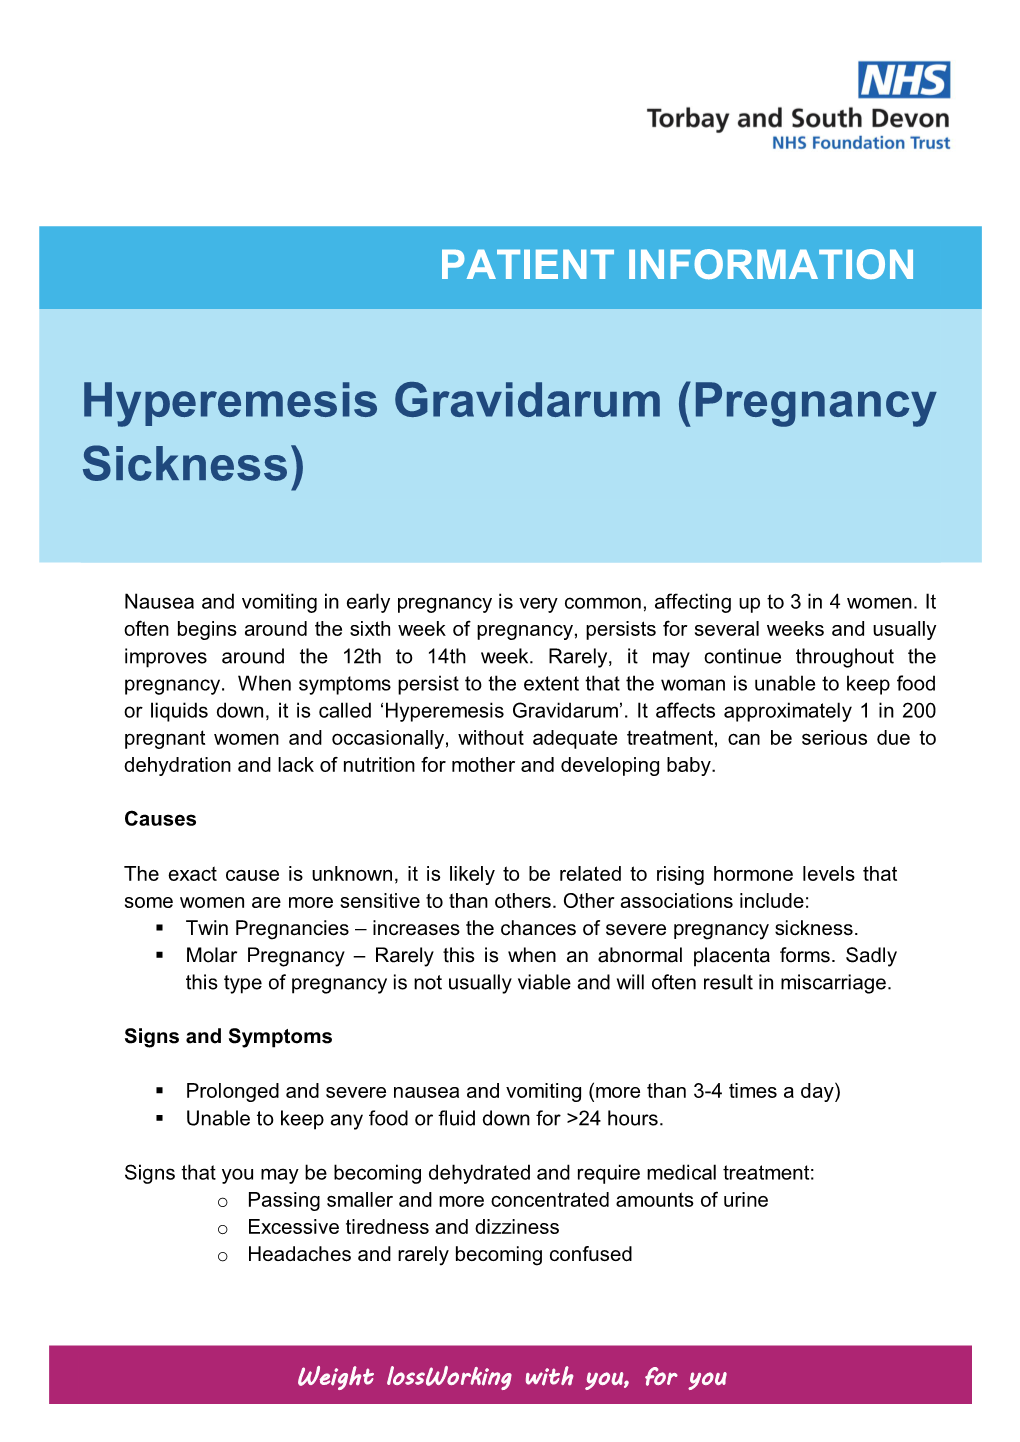 Hyperemesis Gravidarum (Pregnancy Sickness)